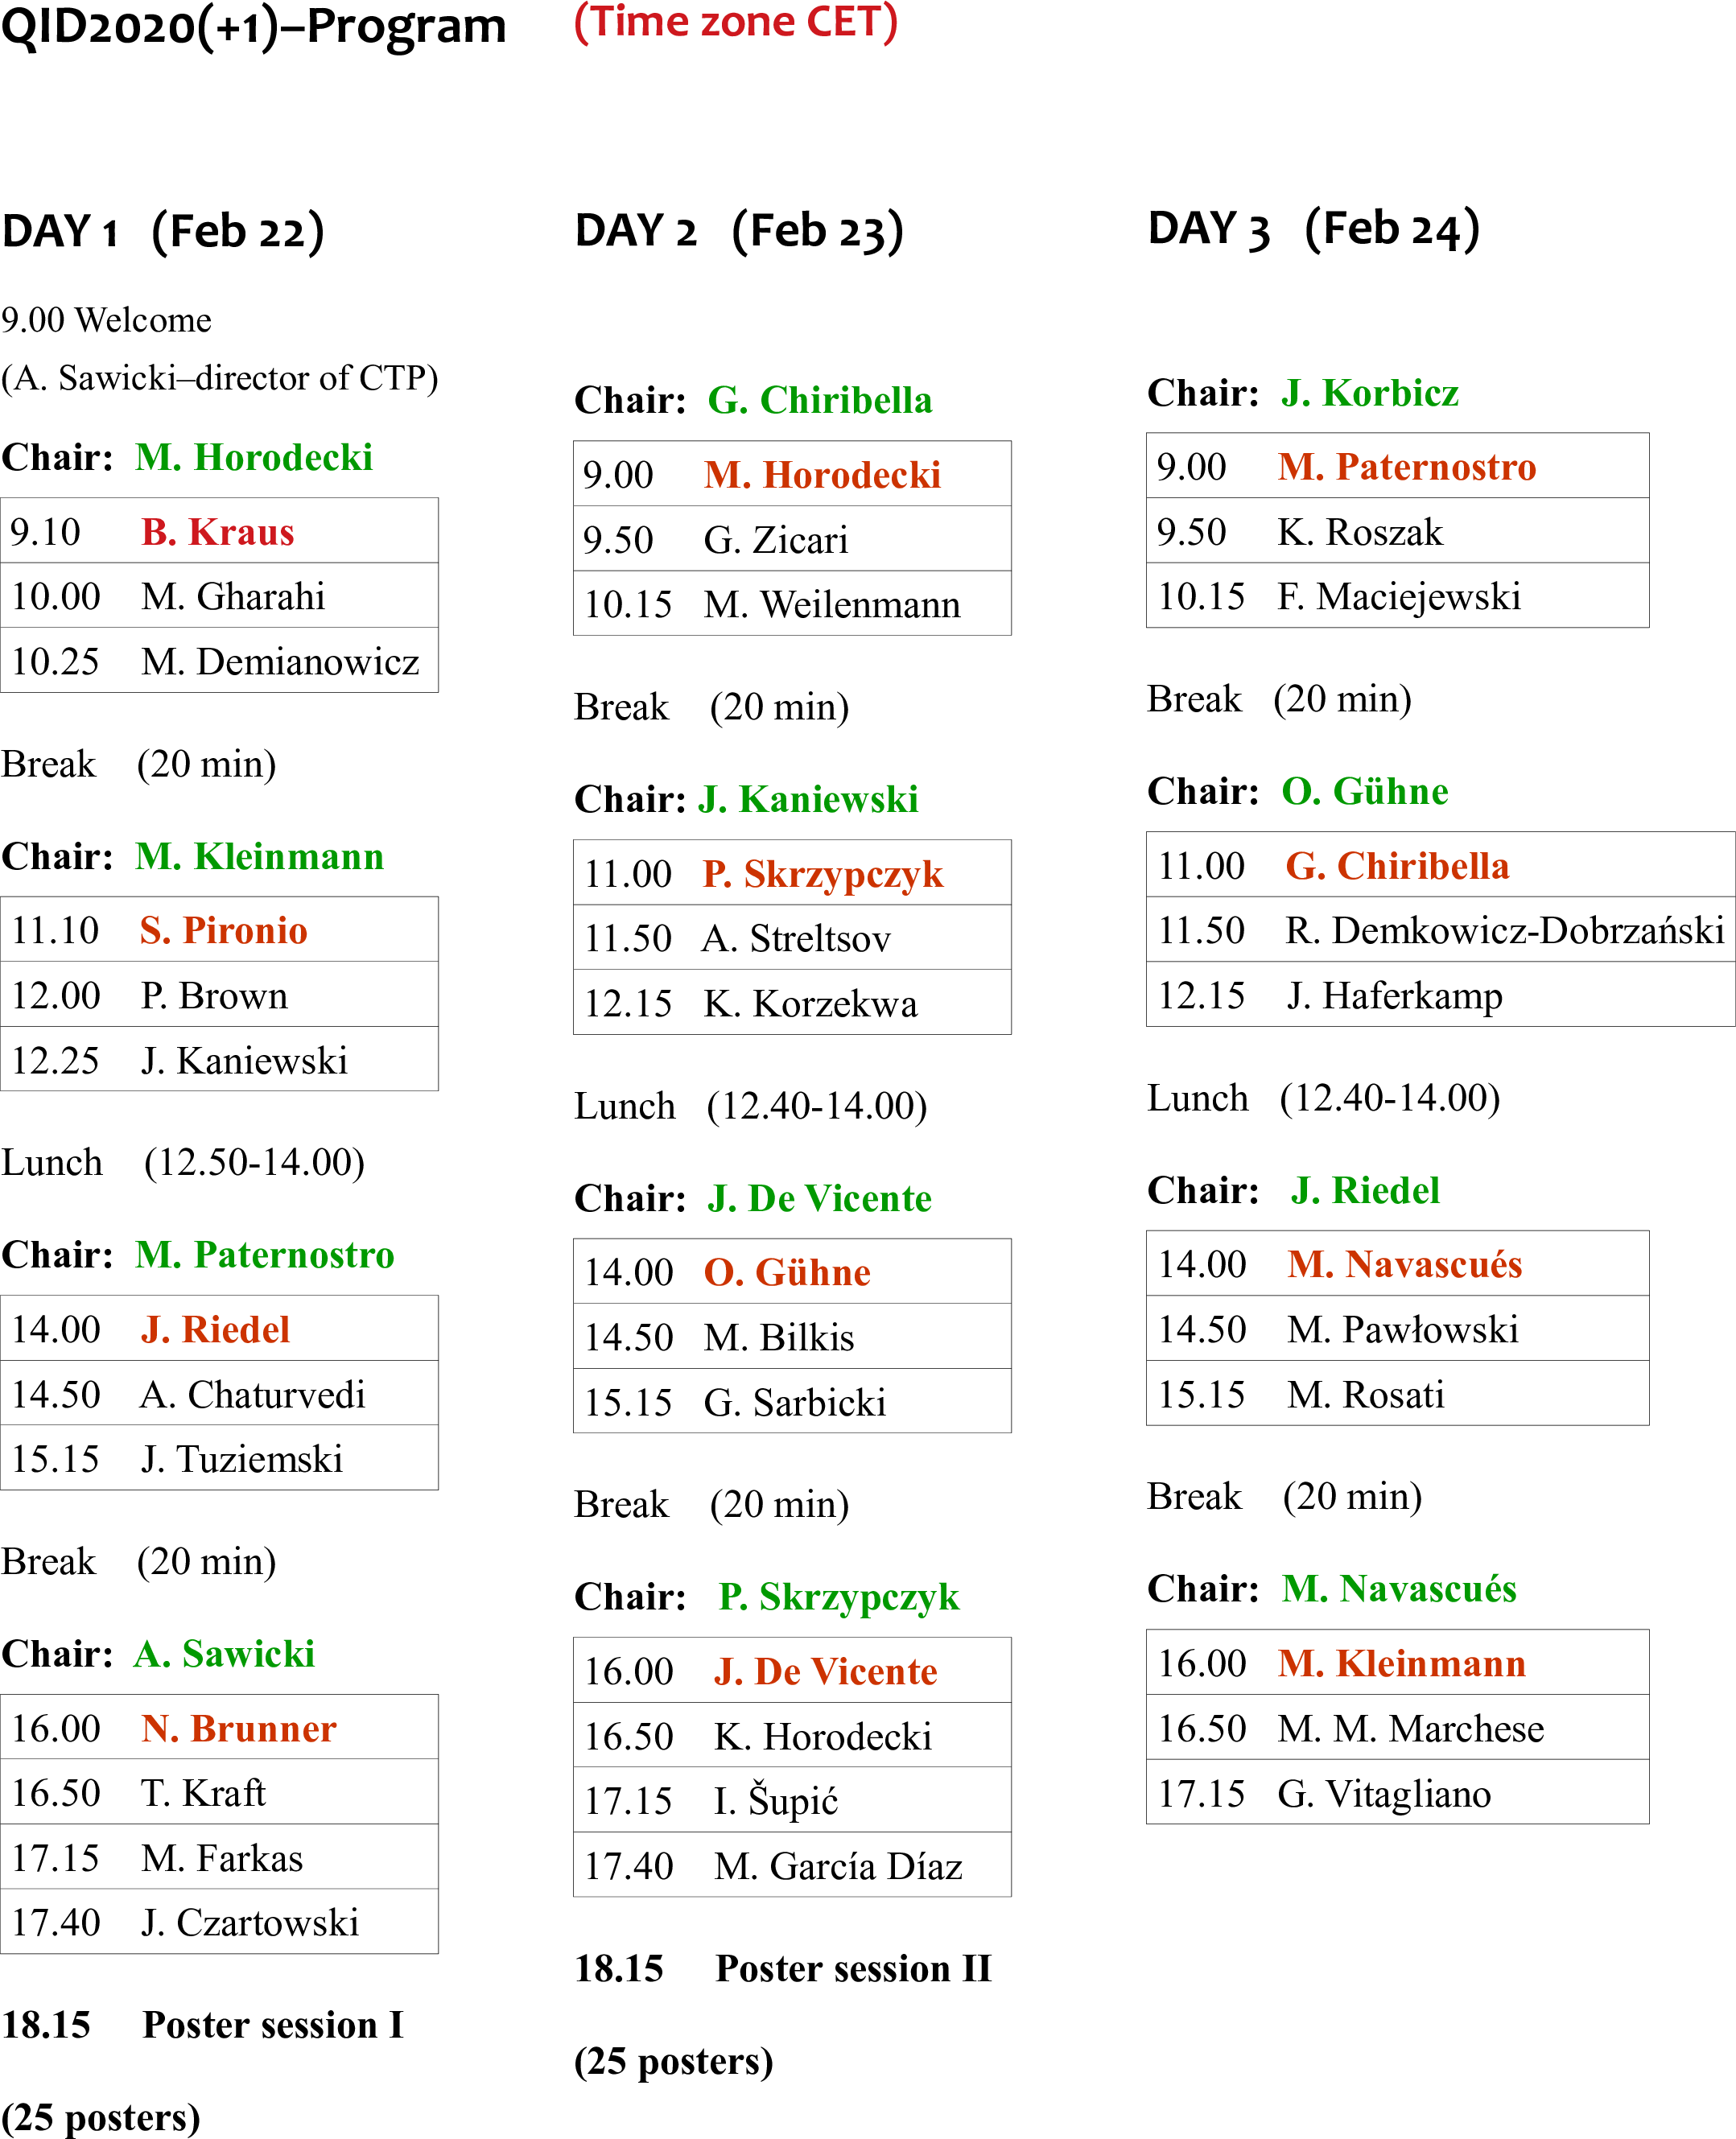 QID2020(+1) schedule.